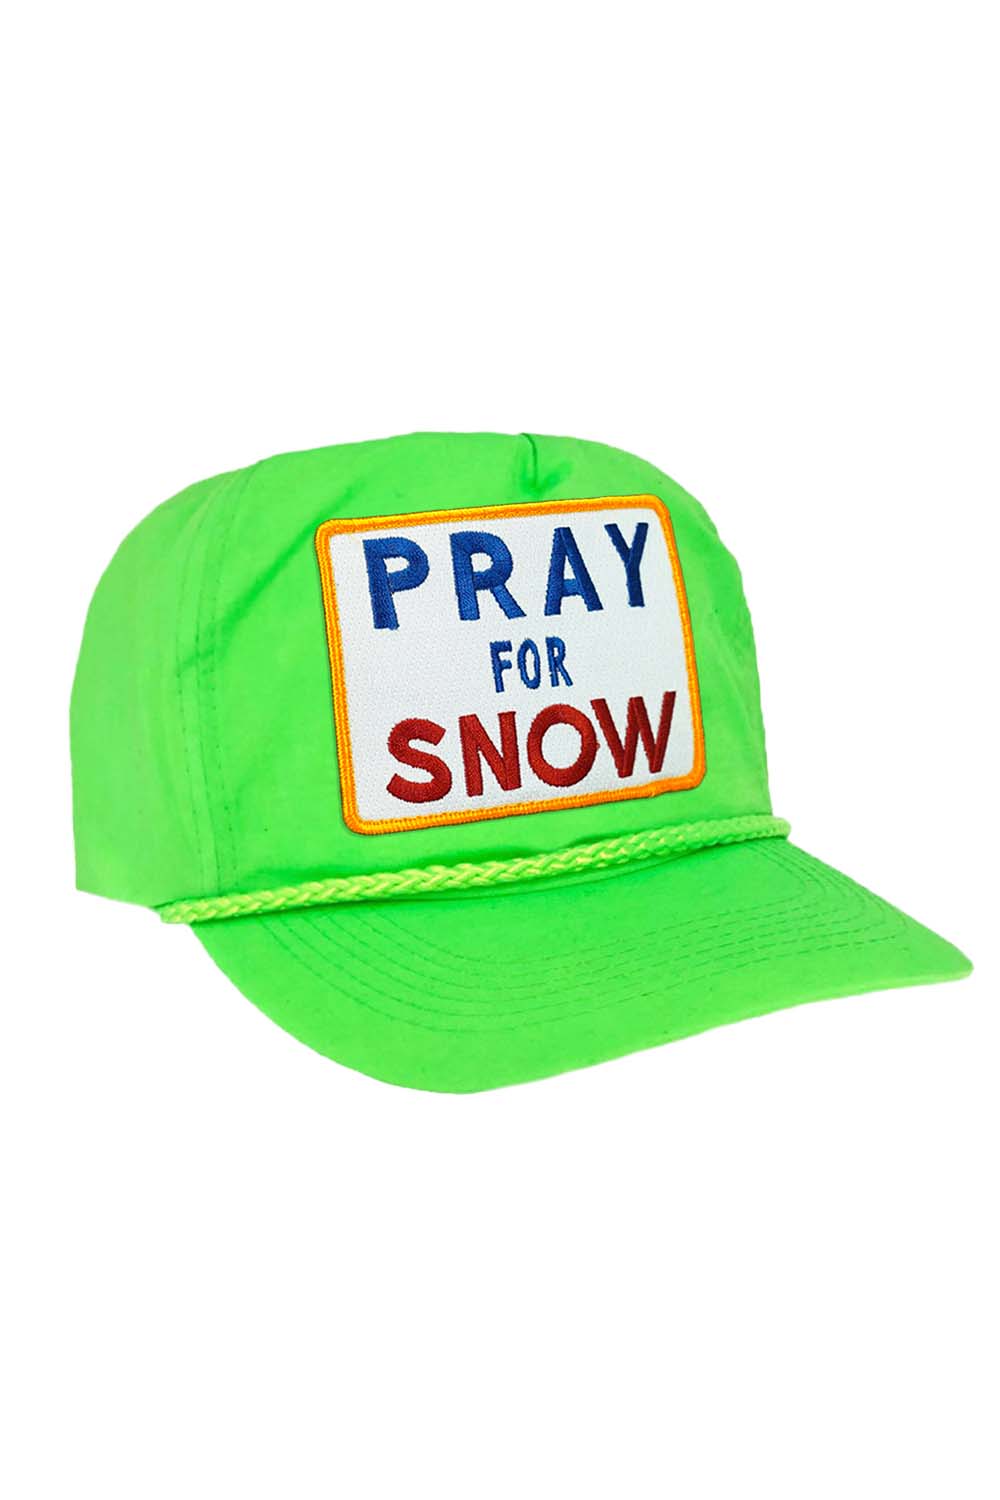 PRAY FOR SNOW - VINTAGE NYLON TRUCKER HAT HATS Aviator Nation NEON PINK 